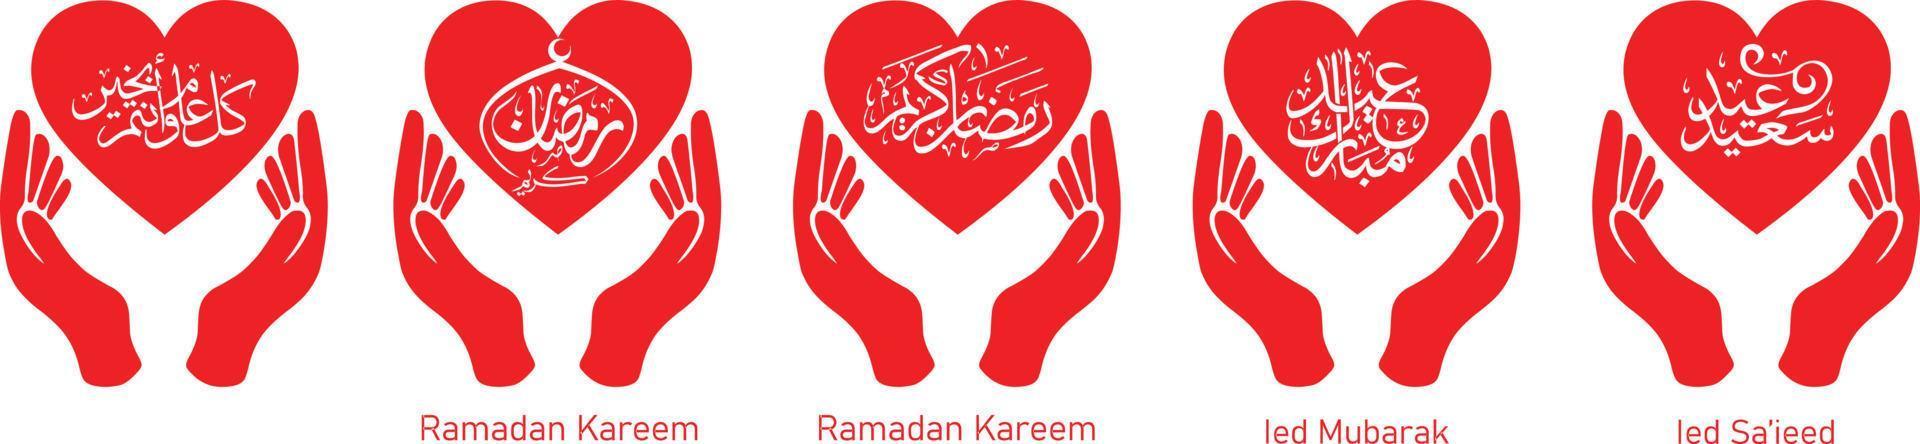 vector illustration praying hands icon for ramadan Kareem and Eid Mubarak red color